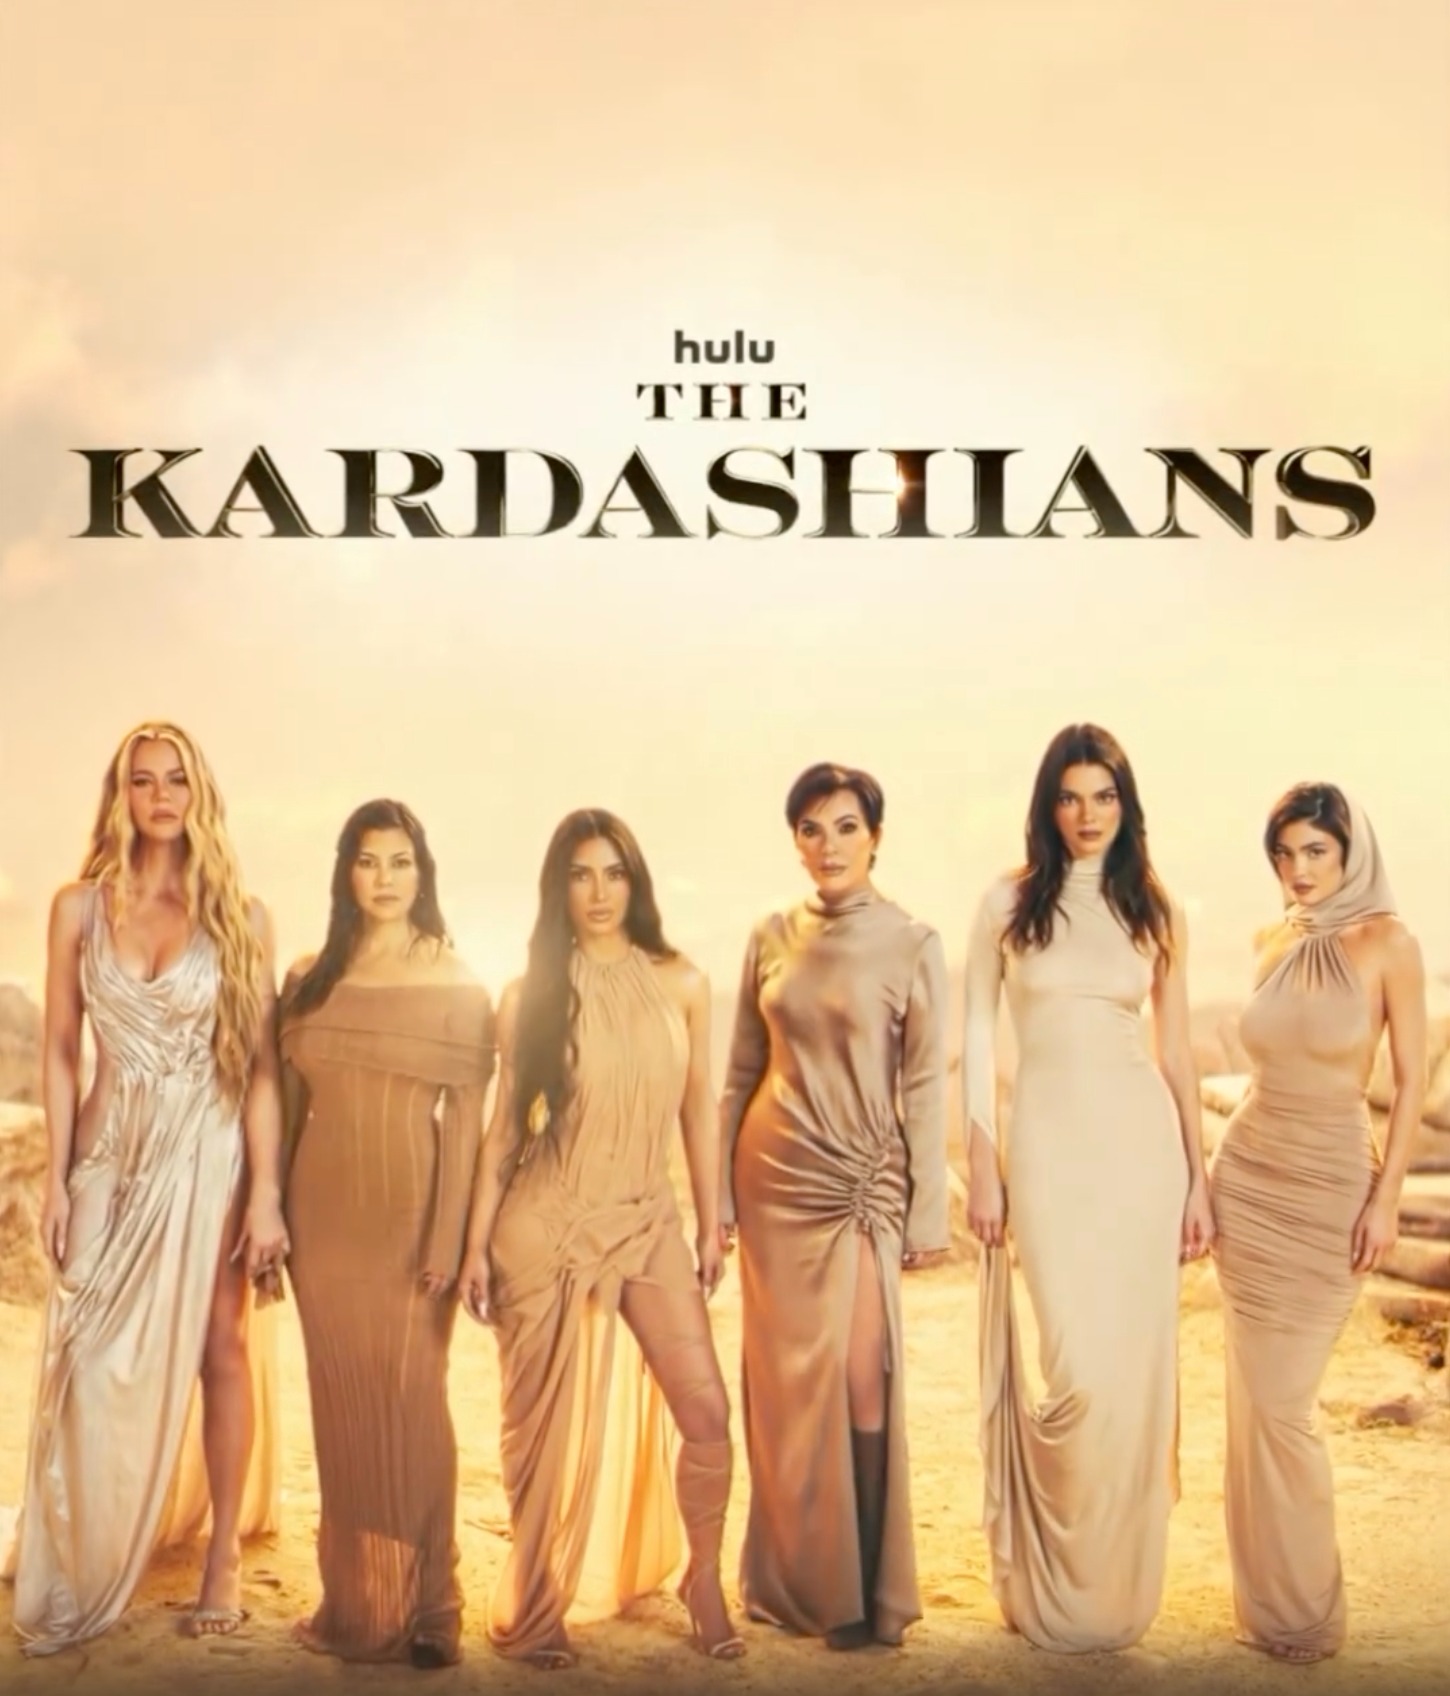 The Kardashians Season 5 is currently airing on Hulu